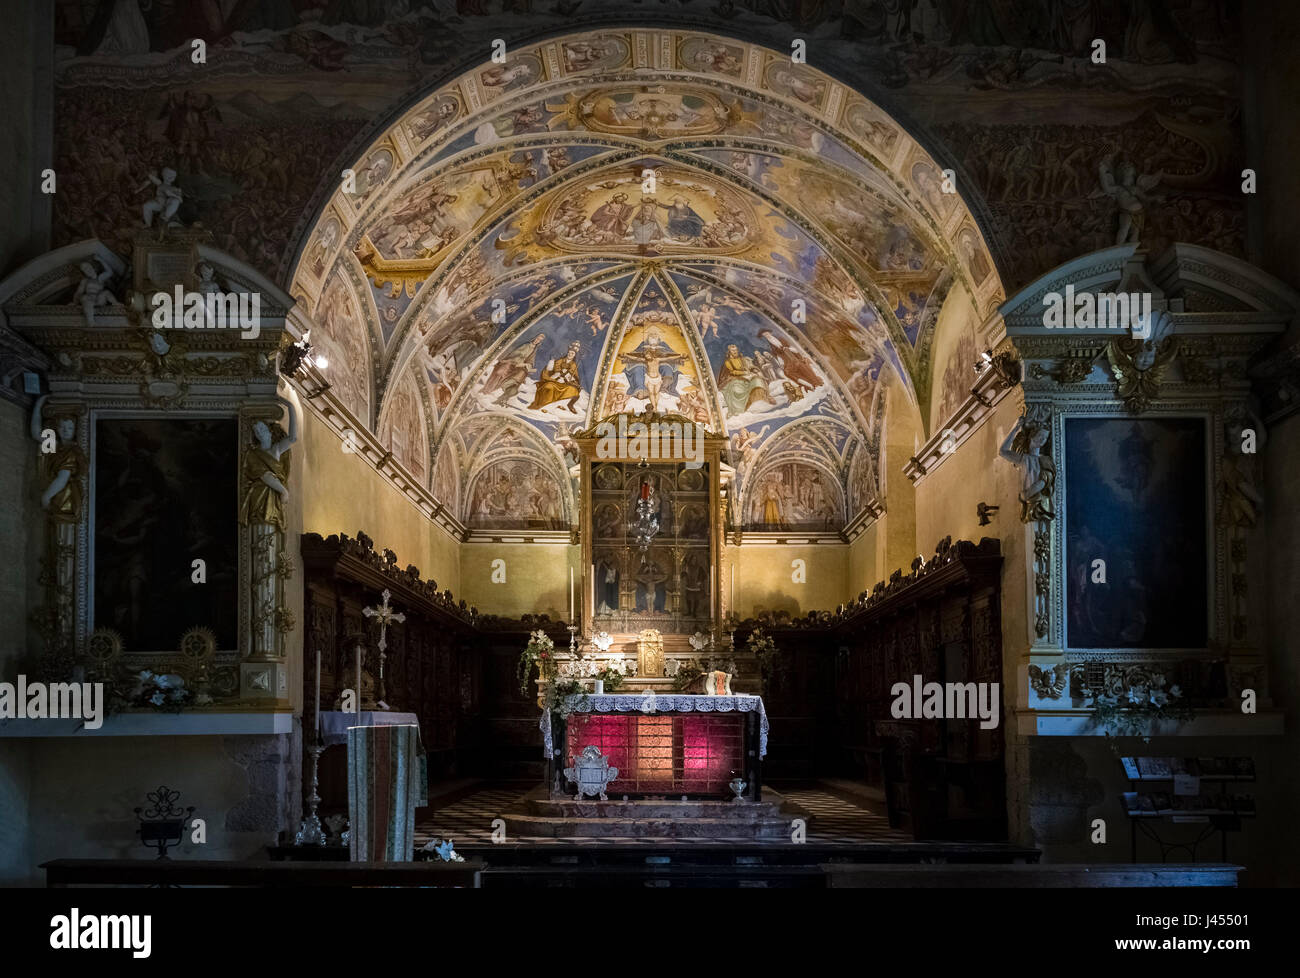 Die wunderschöne Gemälde und Fresken des Santuario della Santissima Trinità in Casnigo, Val Seriana, Provinz Bergamo, Lombardei, Italien. Stockfoto